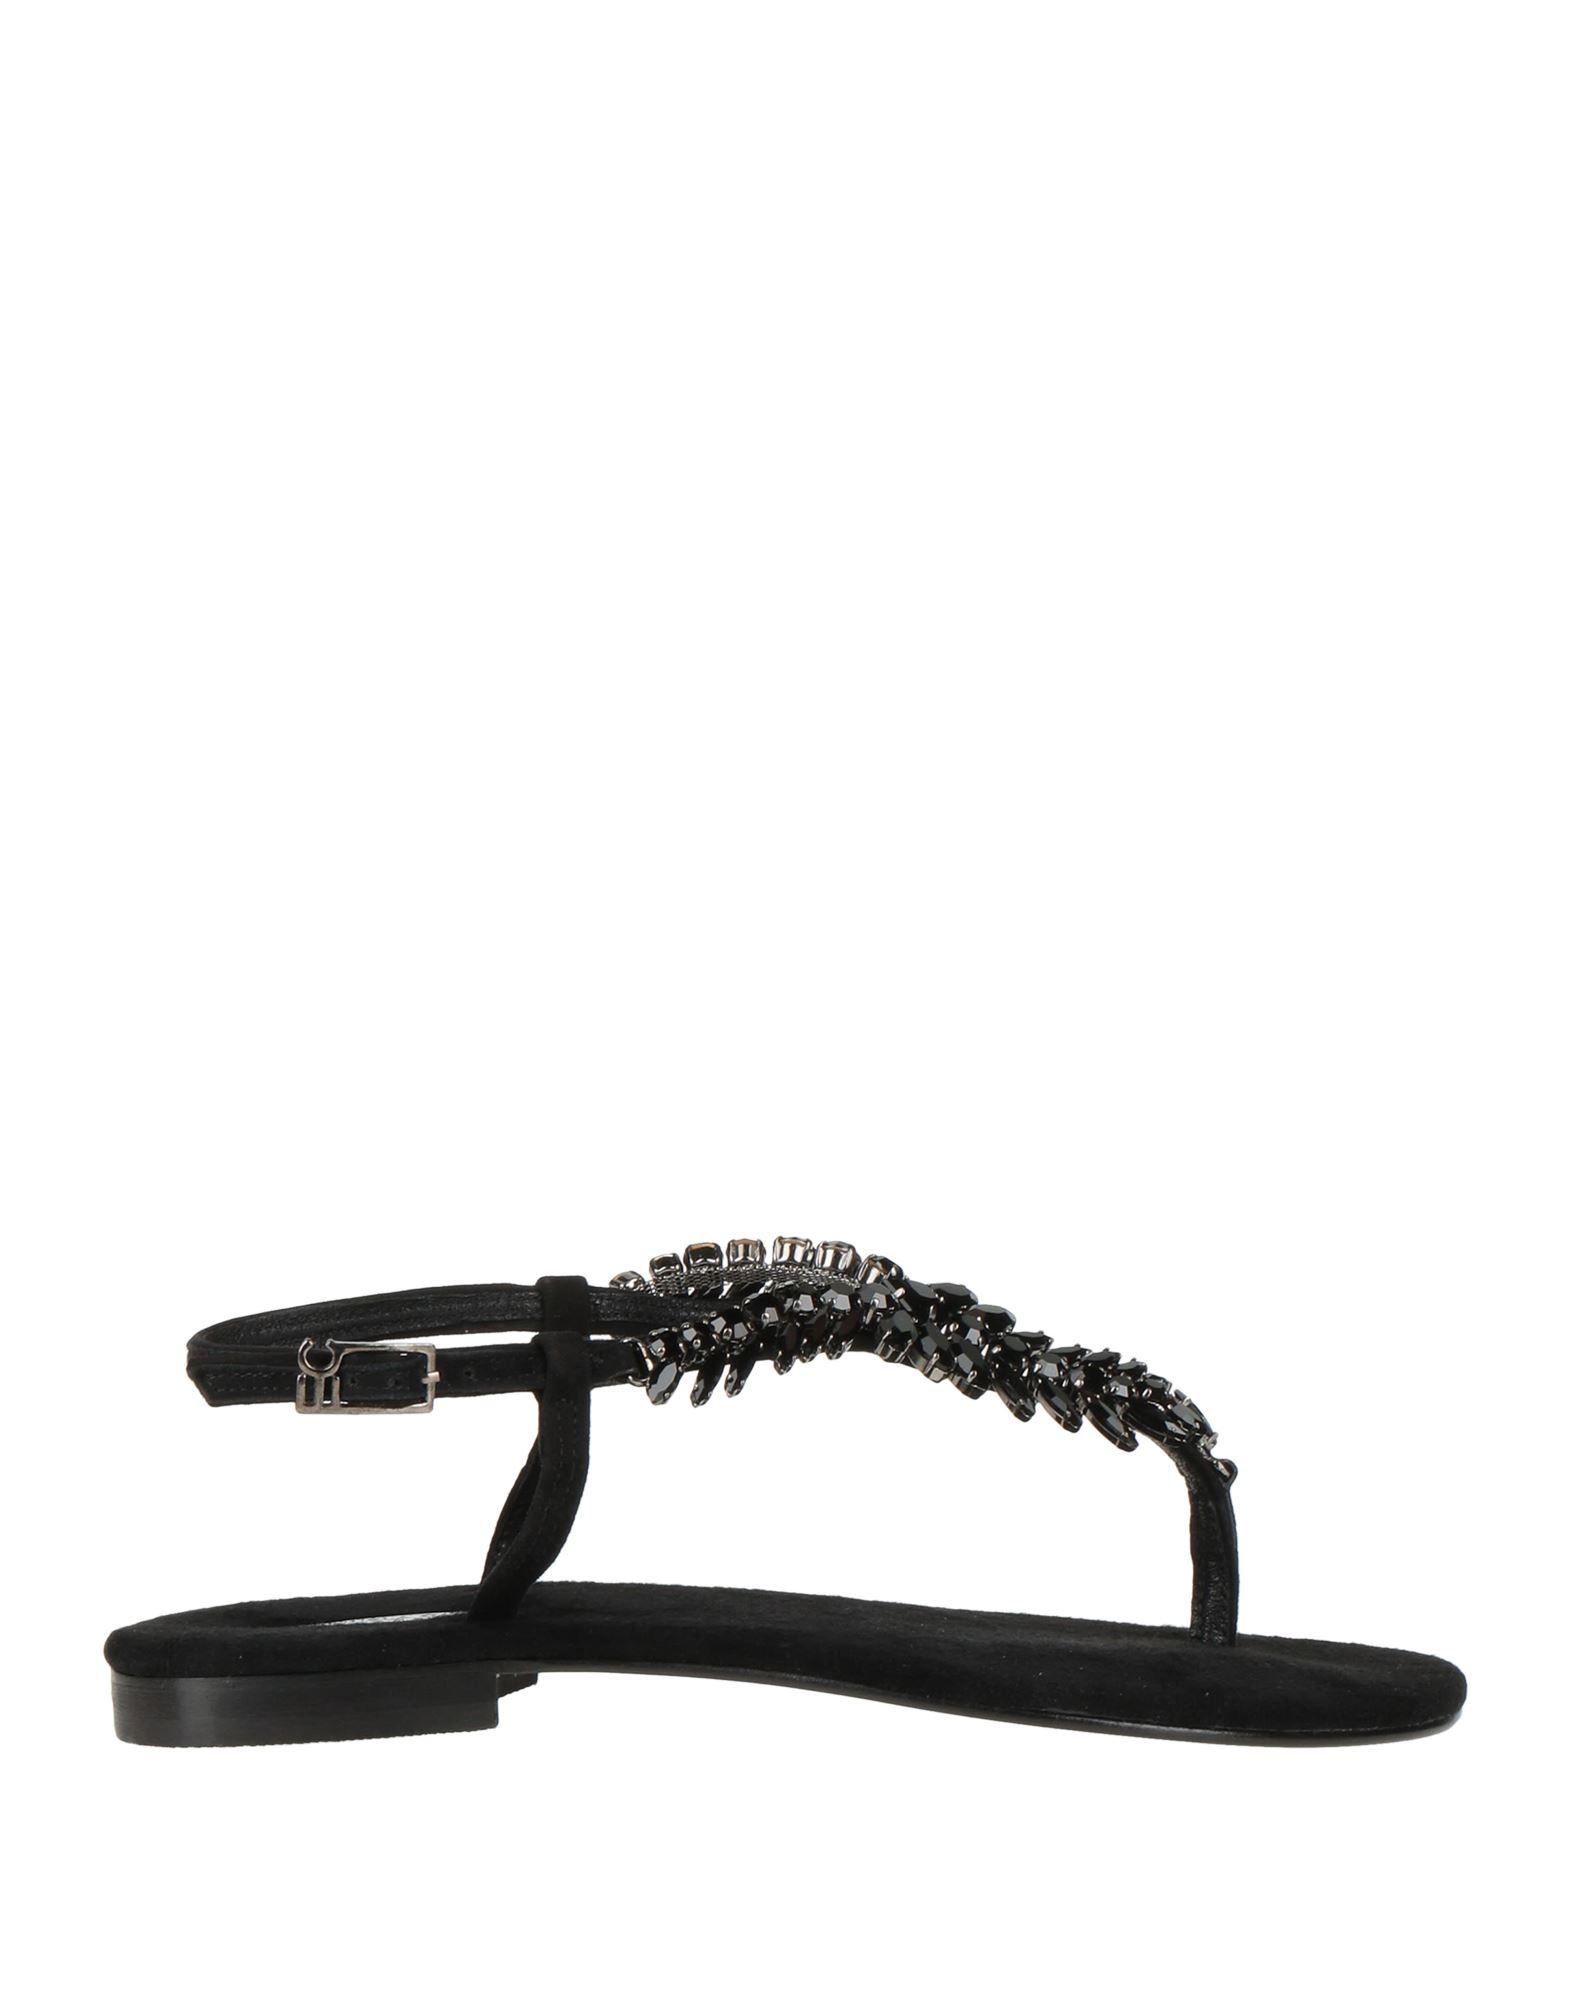 Emanuela Caruso Capri Toe Strap Sandals in Black | Lyst